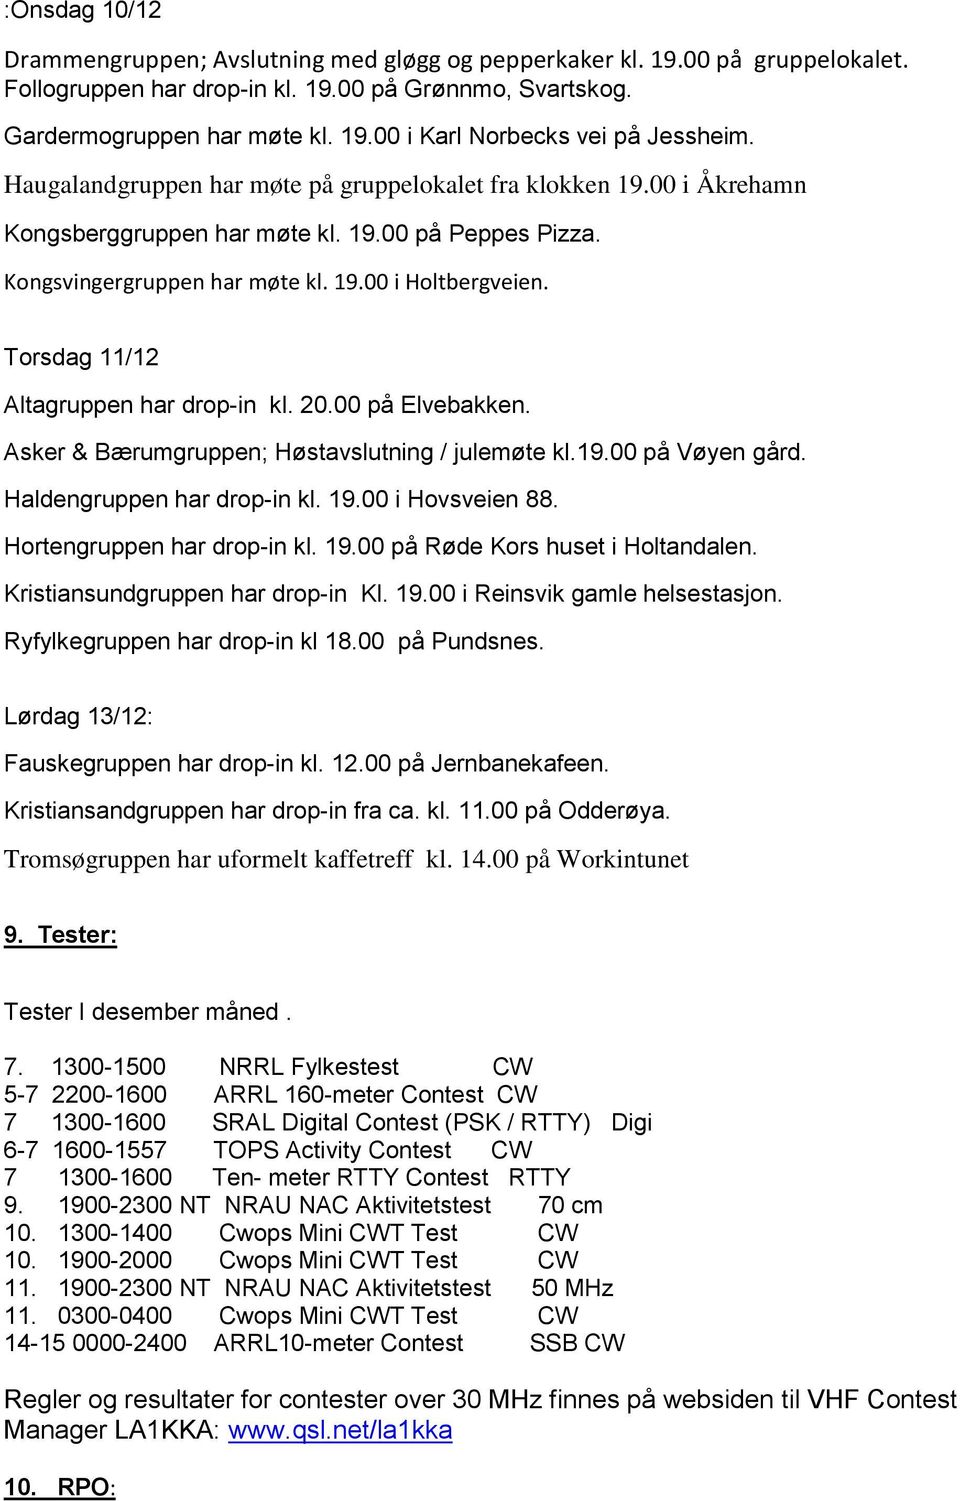 Torsdag 11/12 Altagruppen har drop-in kl. 20.00 på Elvebakken. Asker & Bærumgruppen; Høstavslutning / julemøte kl.19.00 på Vøyen gård. Haldengruppen har drop-in kl. 19.00 i Hovsveien 88.